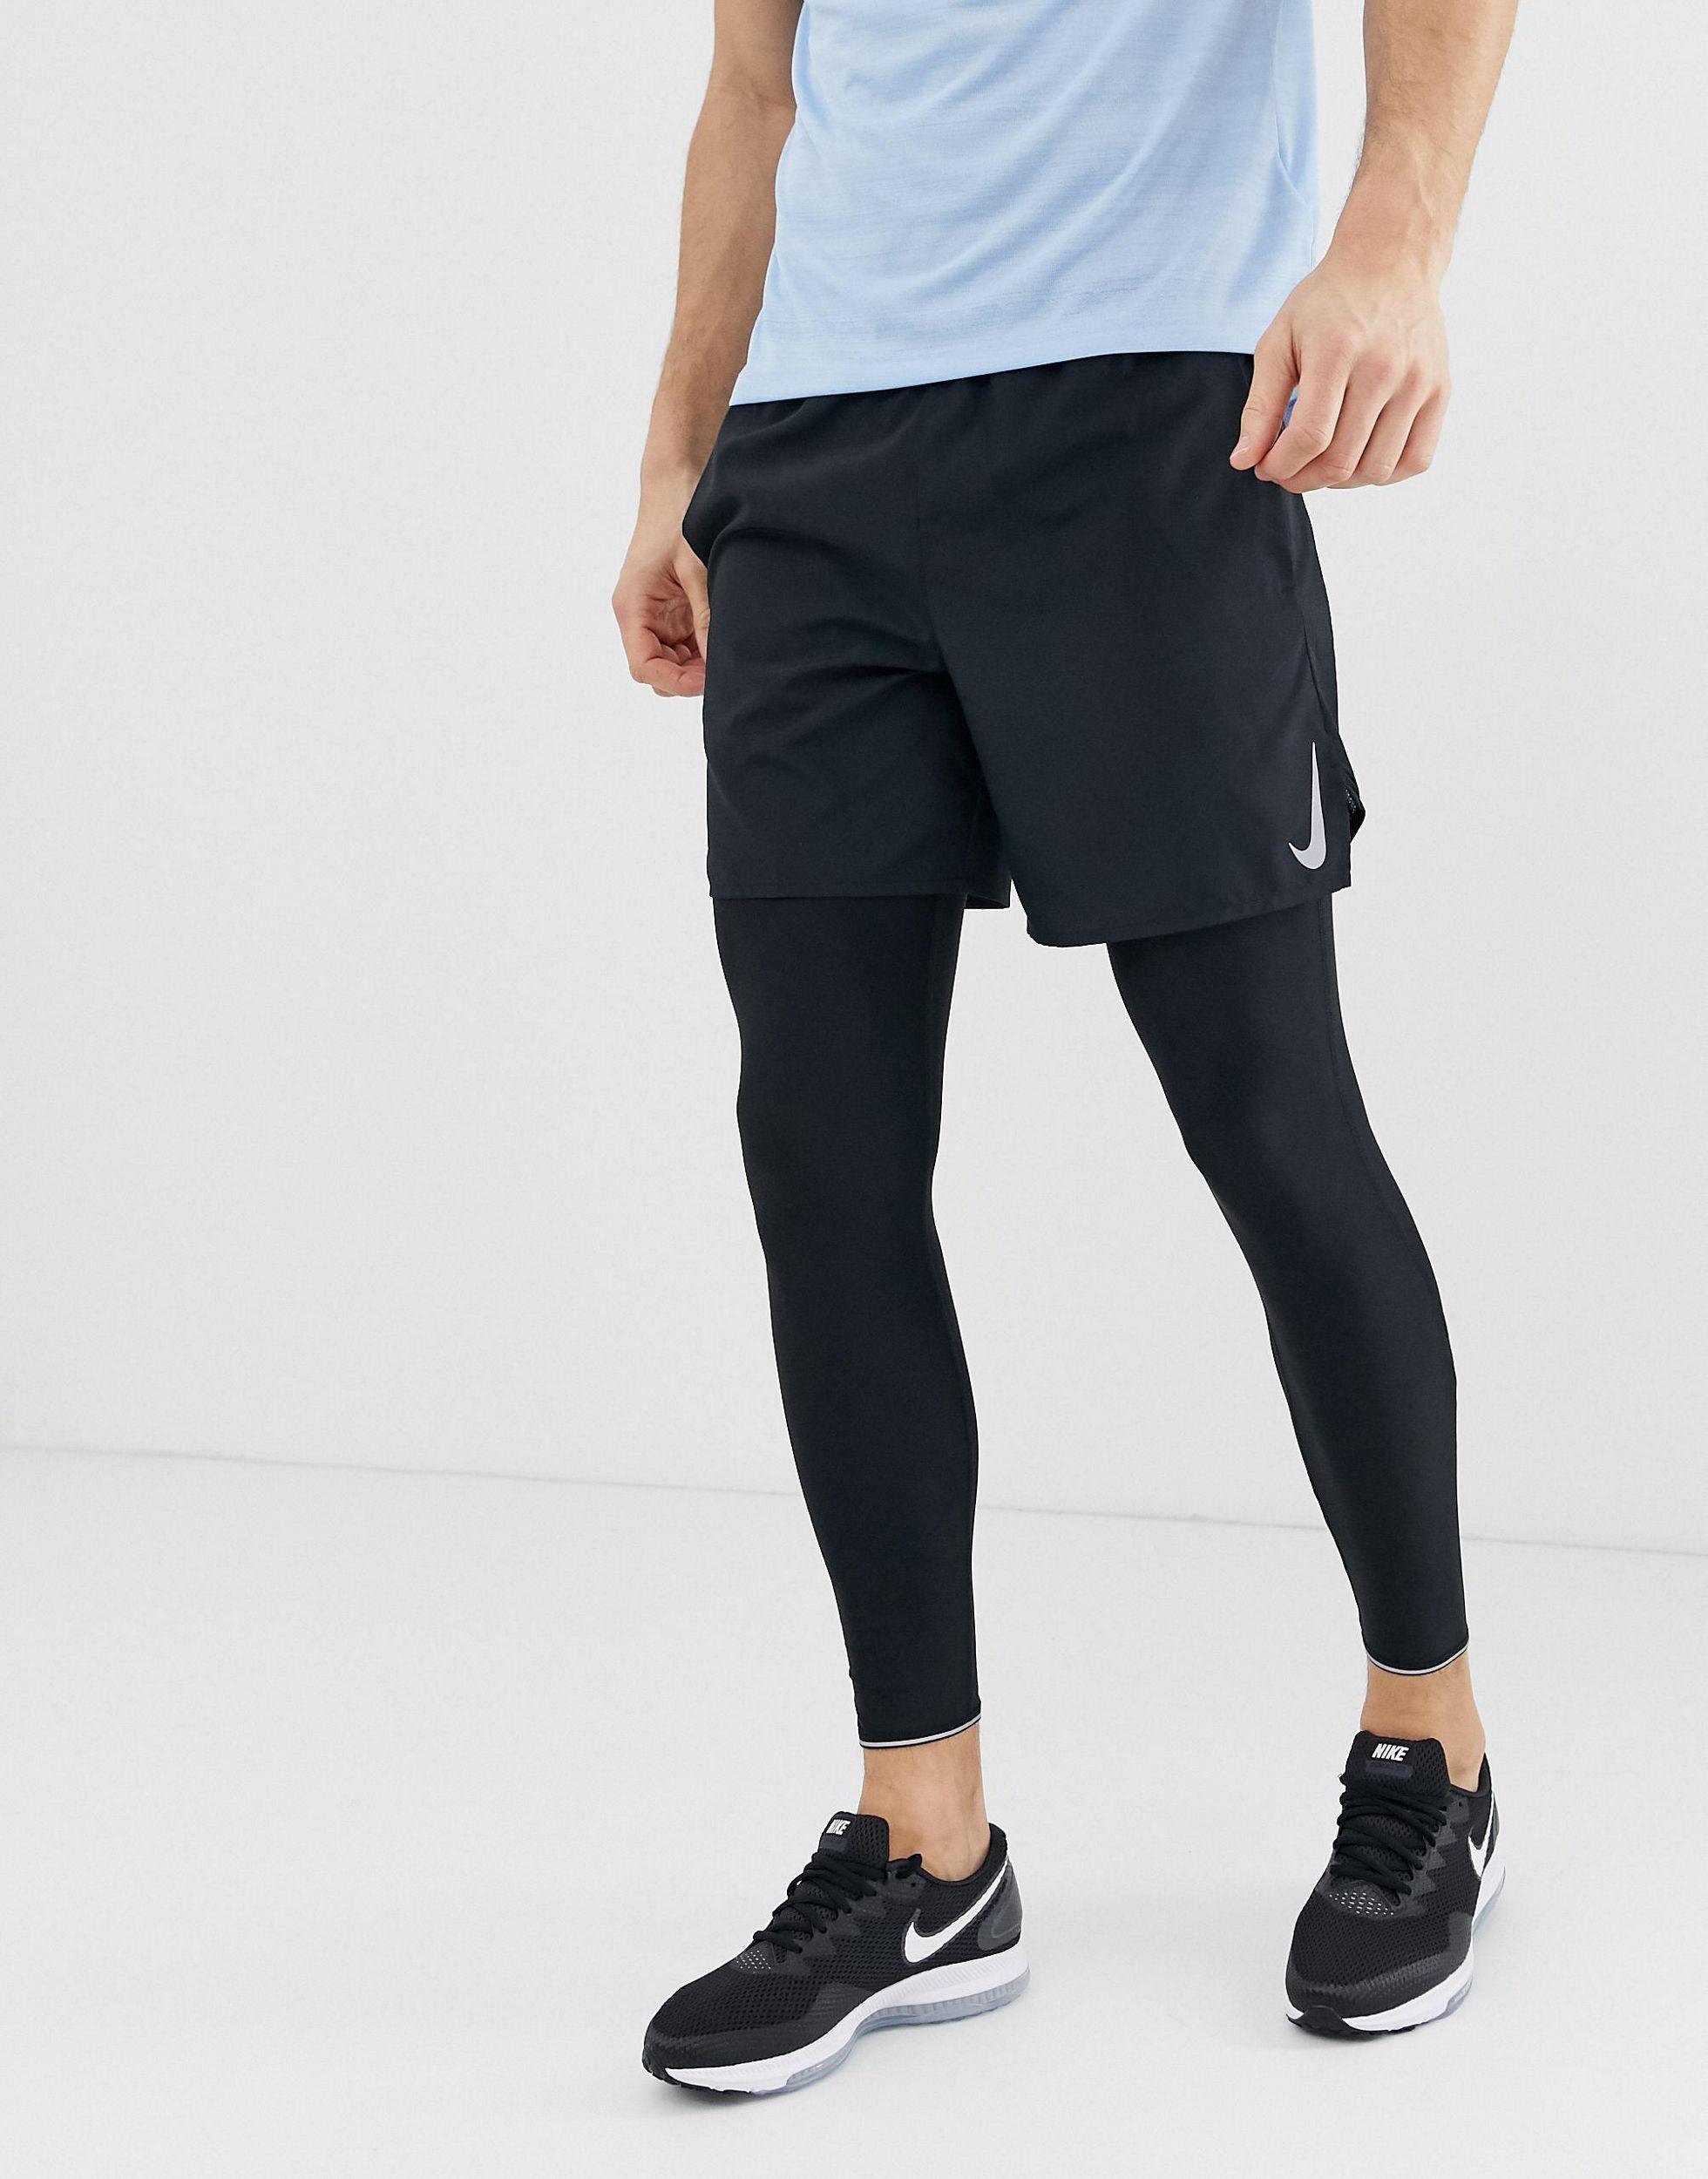 challenger 7 inch running shorts - grey